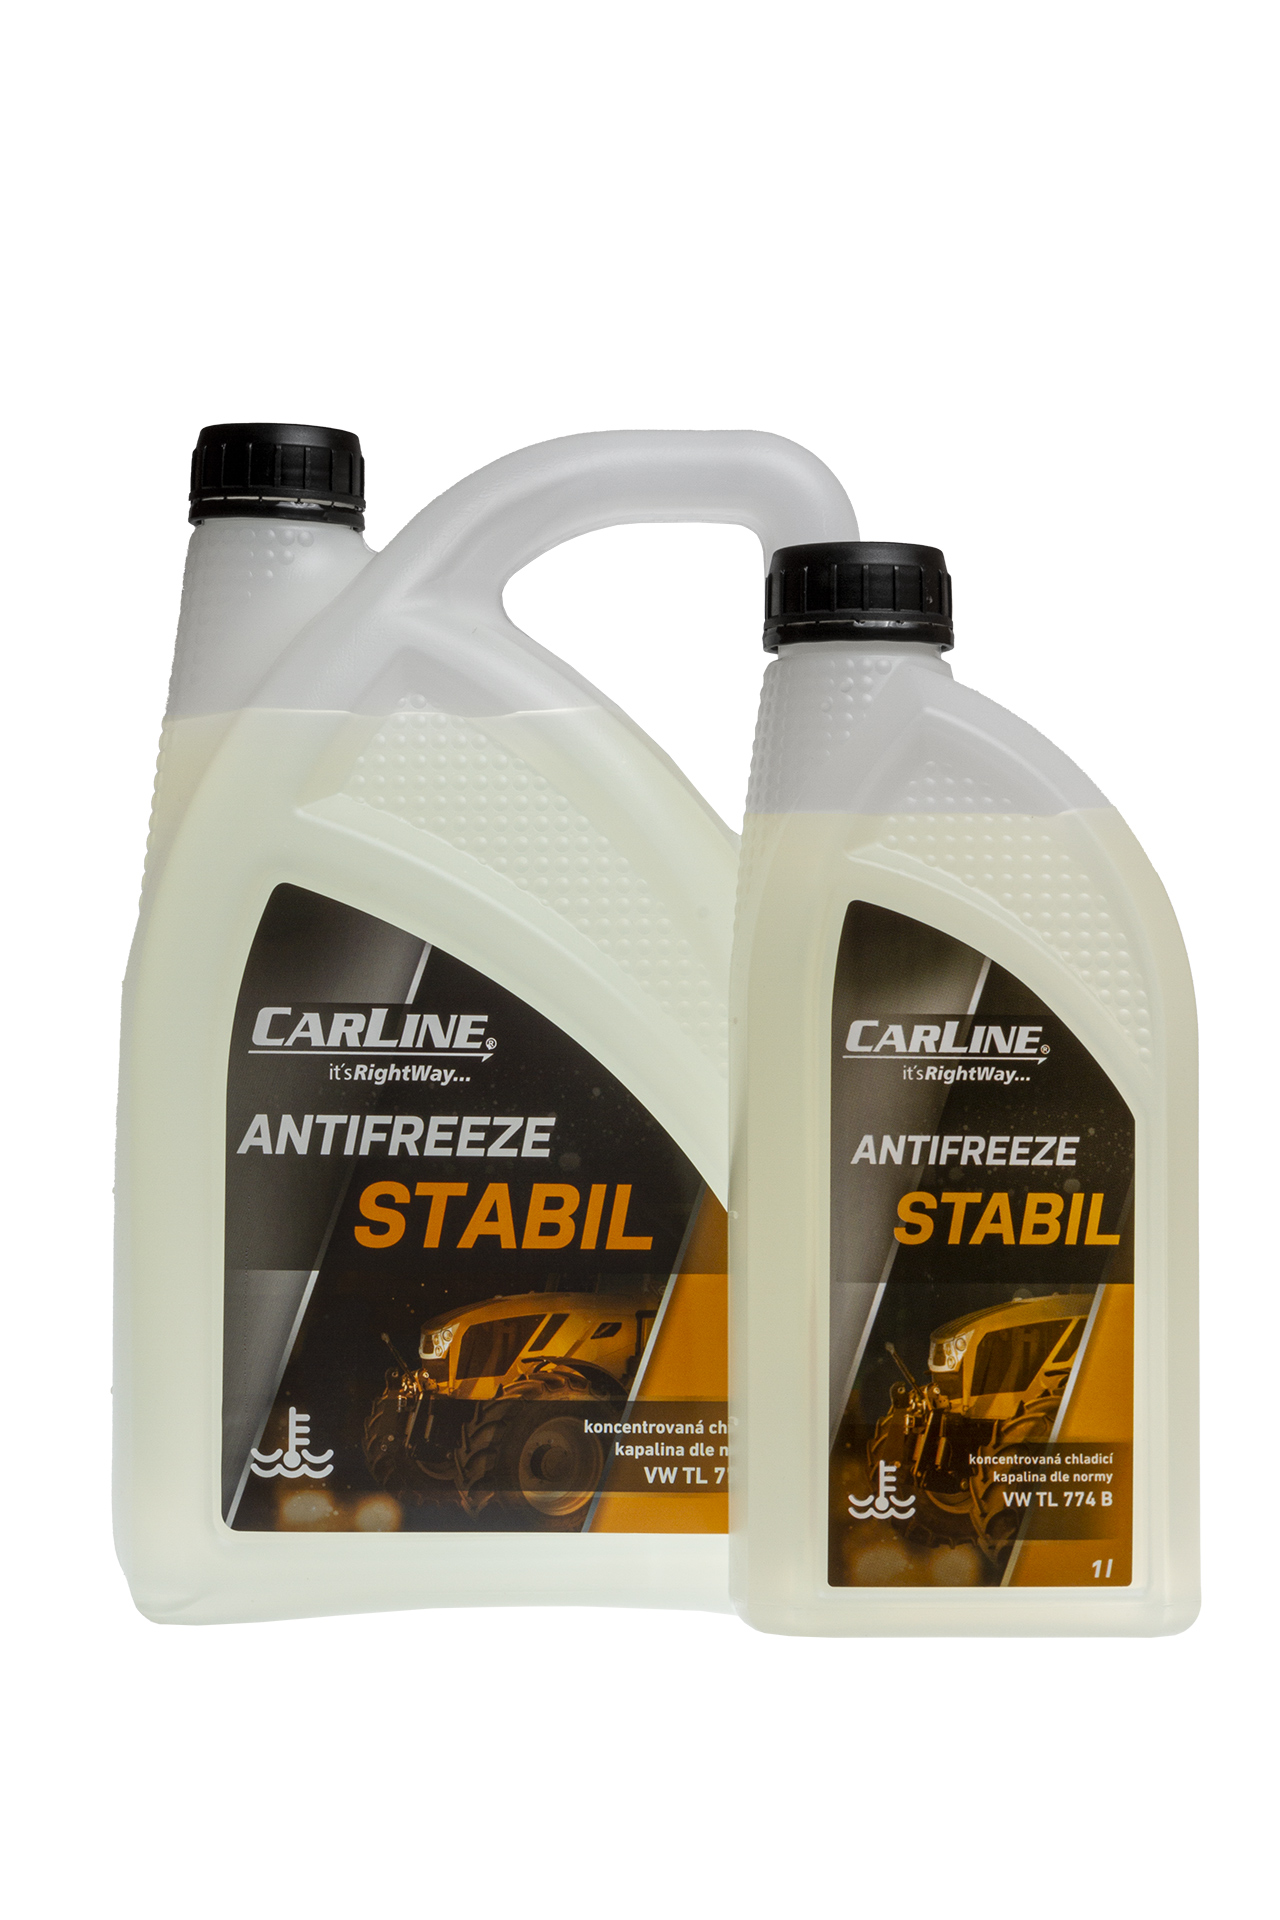 CARLINE® Antifreeze Stabil Objem: 25 l